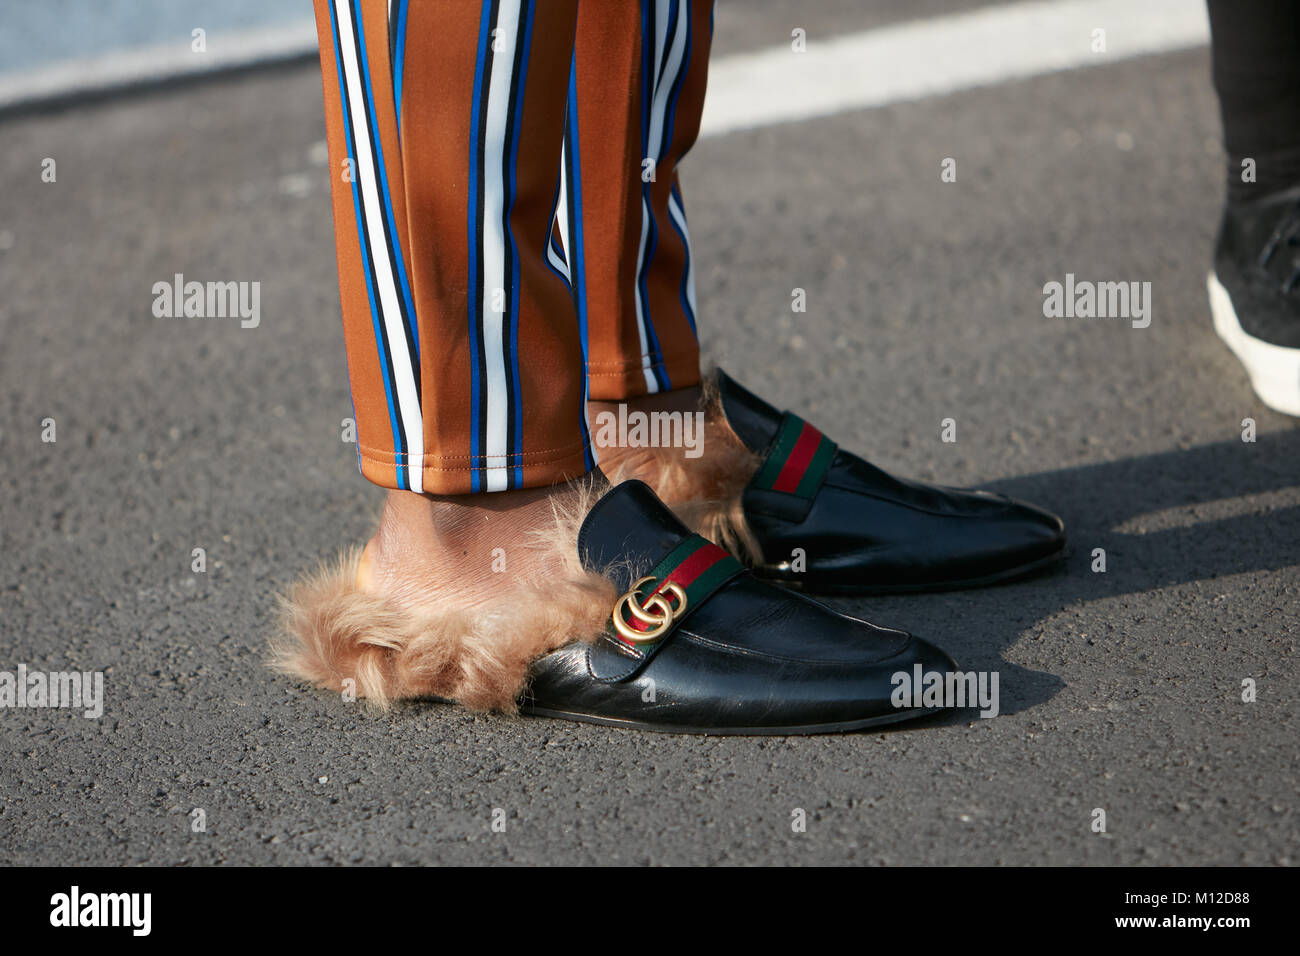 Gucci hausschuhe -Fotos und -Bildmaterial in hoher Auflösung – Alamy